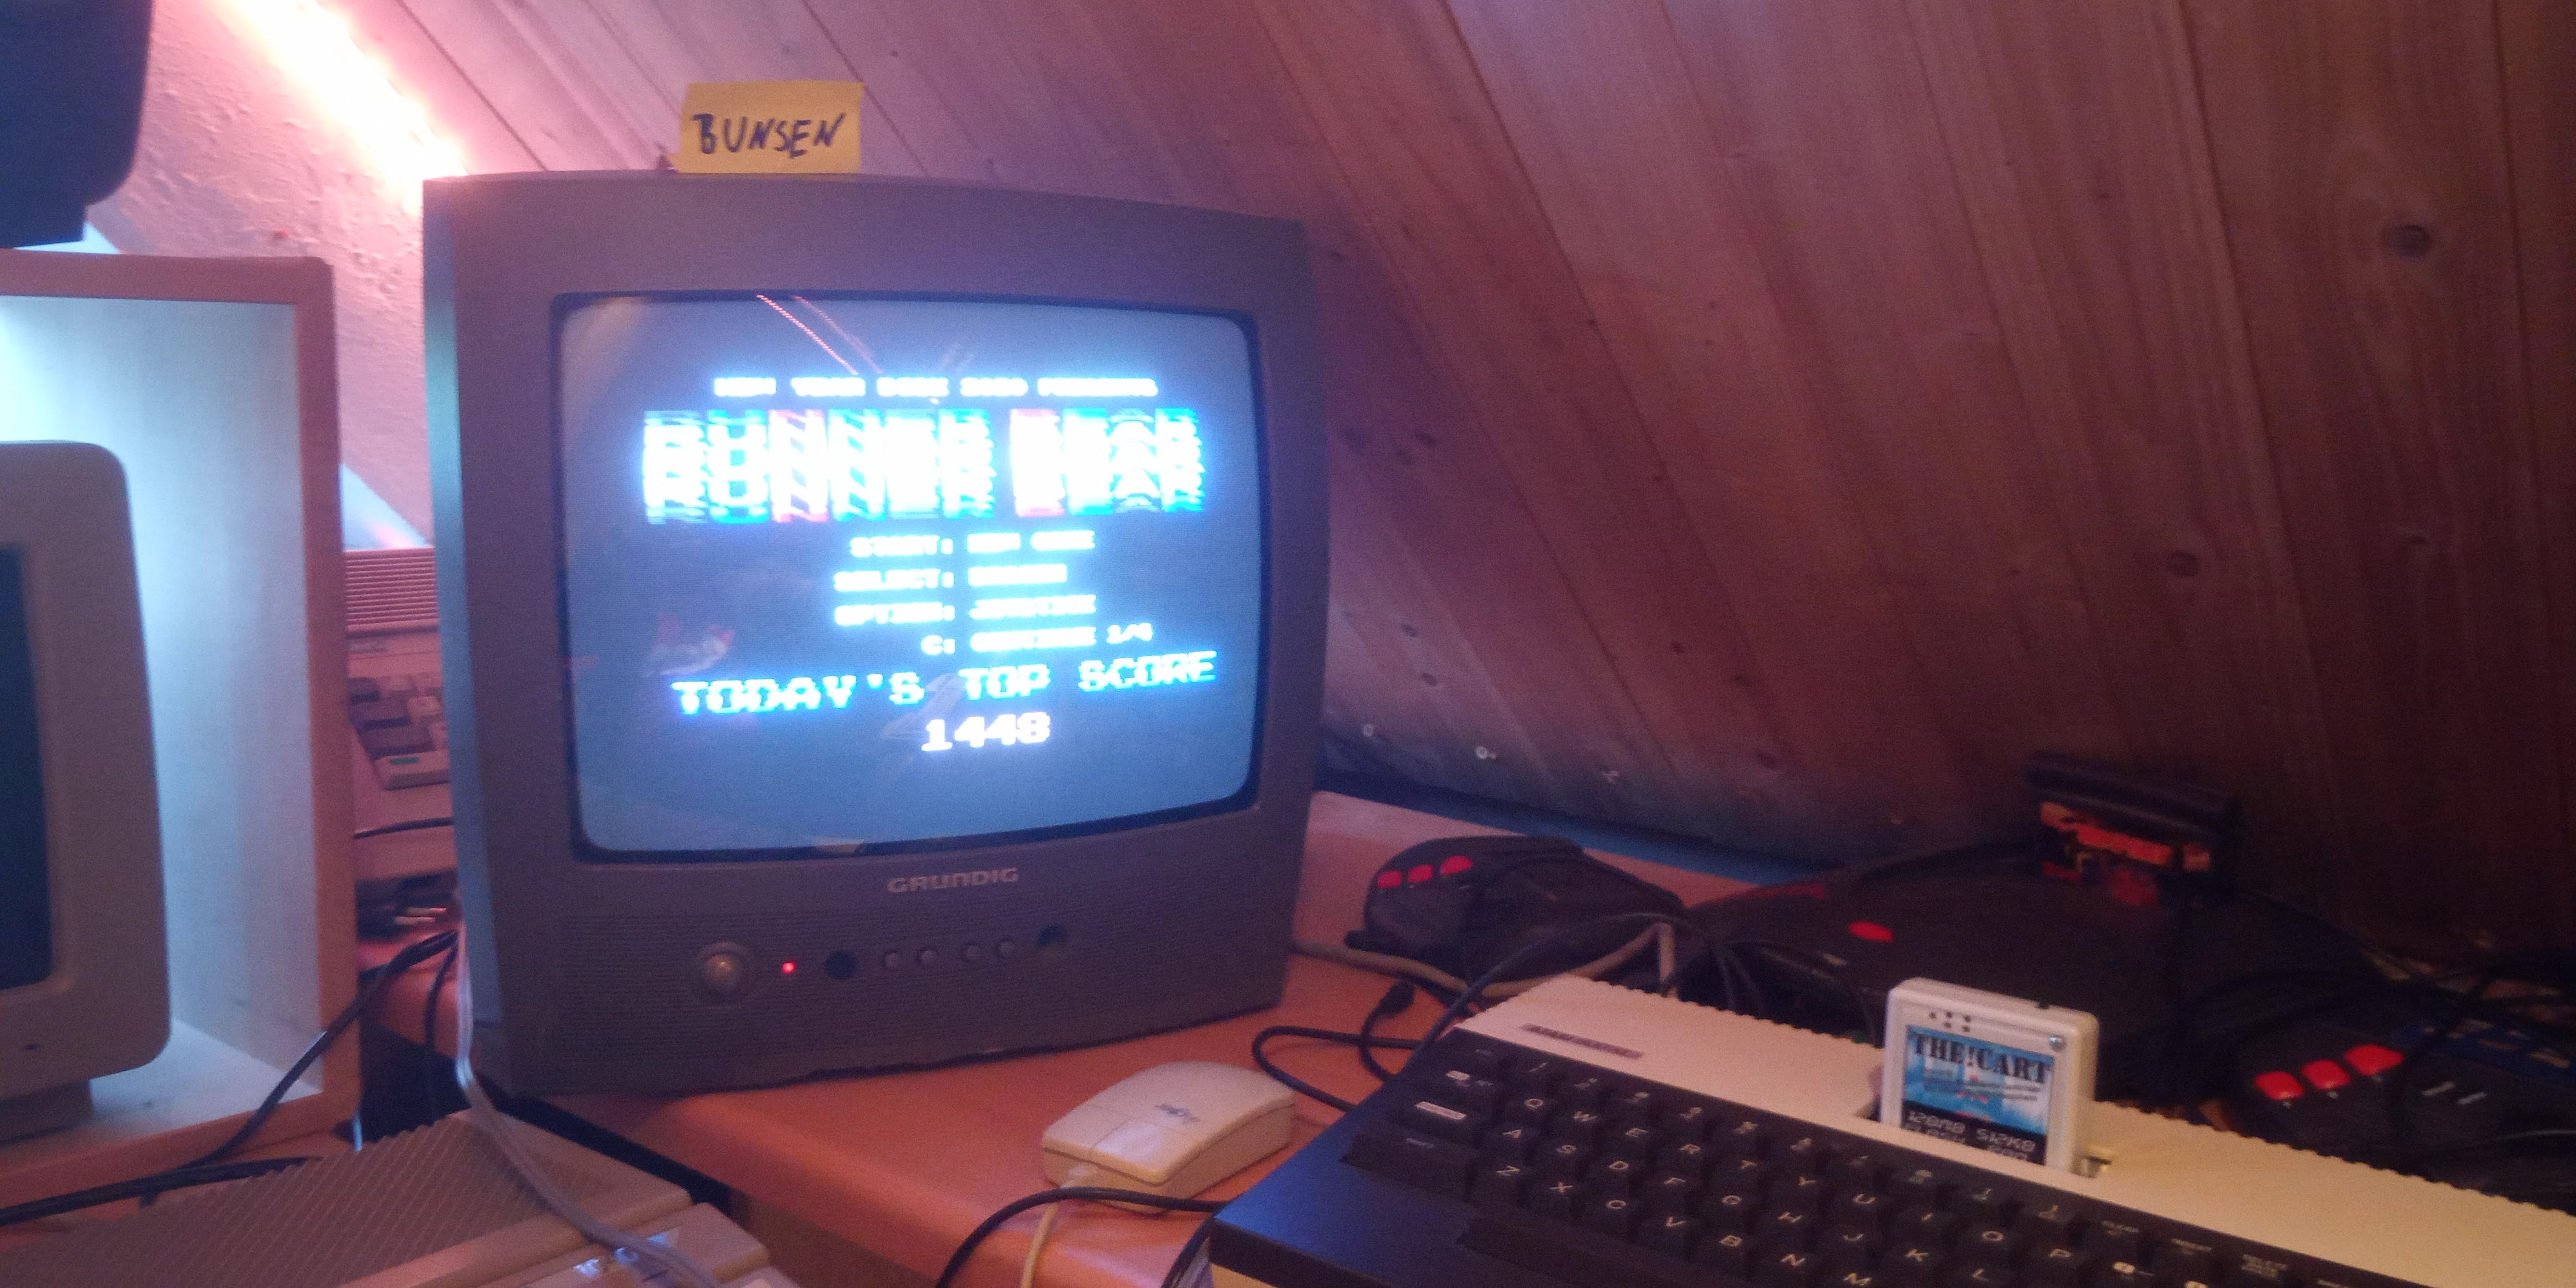 Bunsen: Runner Bear [Dragon] (Atari 400/800/XL/XE) 1,448 points on 2020-05-18 12:02:13